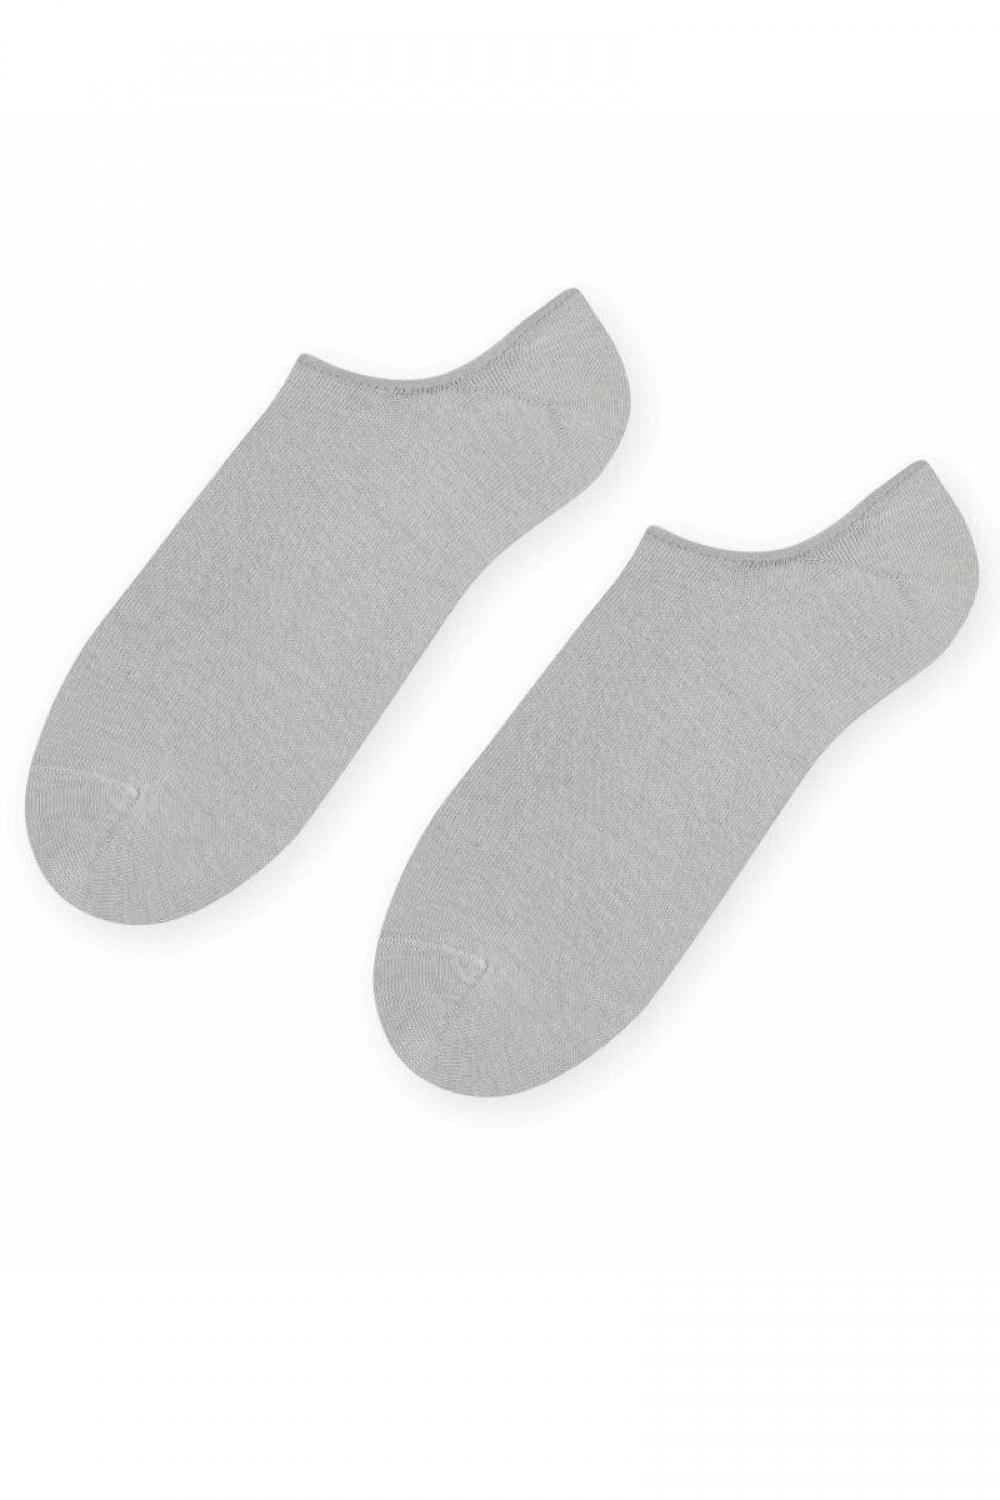 E-shop Dámske ponožky Invisible 070 grey